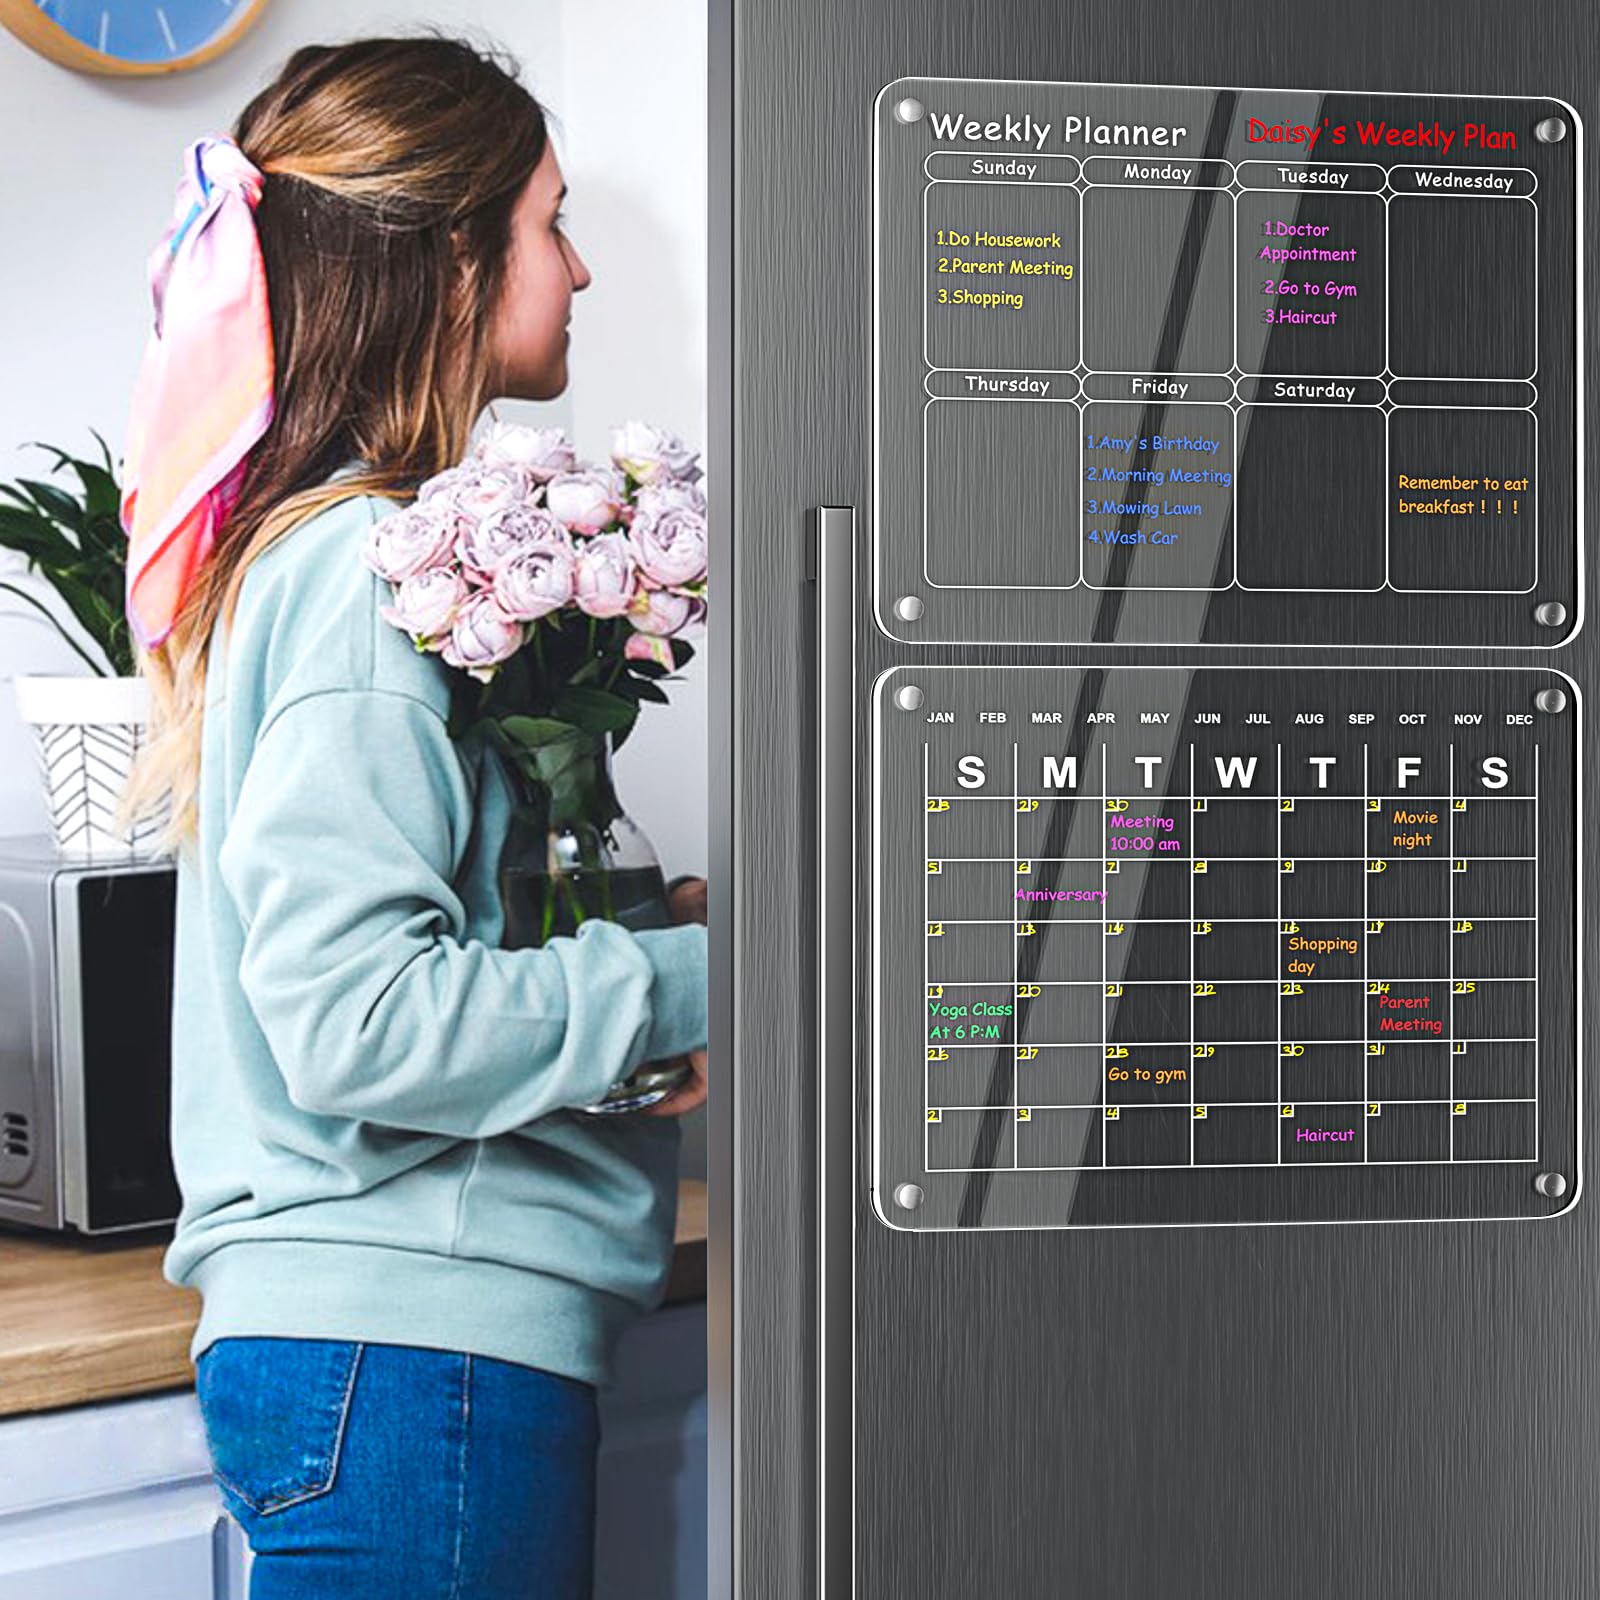 Acrylic Magnetic Calendar for Fridge, Polegas 16"X12" Clear Refrigerator Calendar, Dry Erase Fridge Calendar Whiteboard, Small Monthly Planner Schedule Board with 8 Markers Eraser